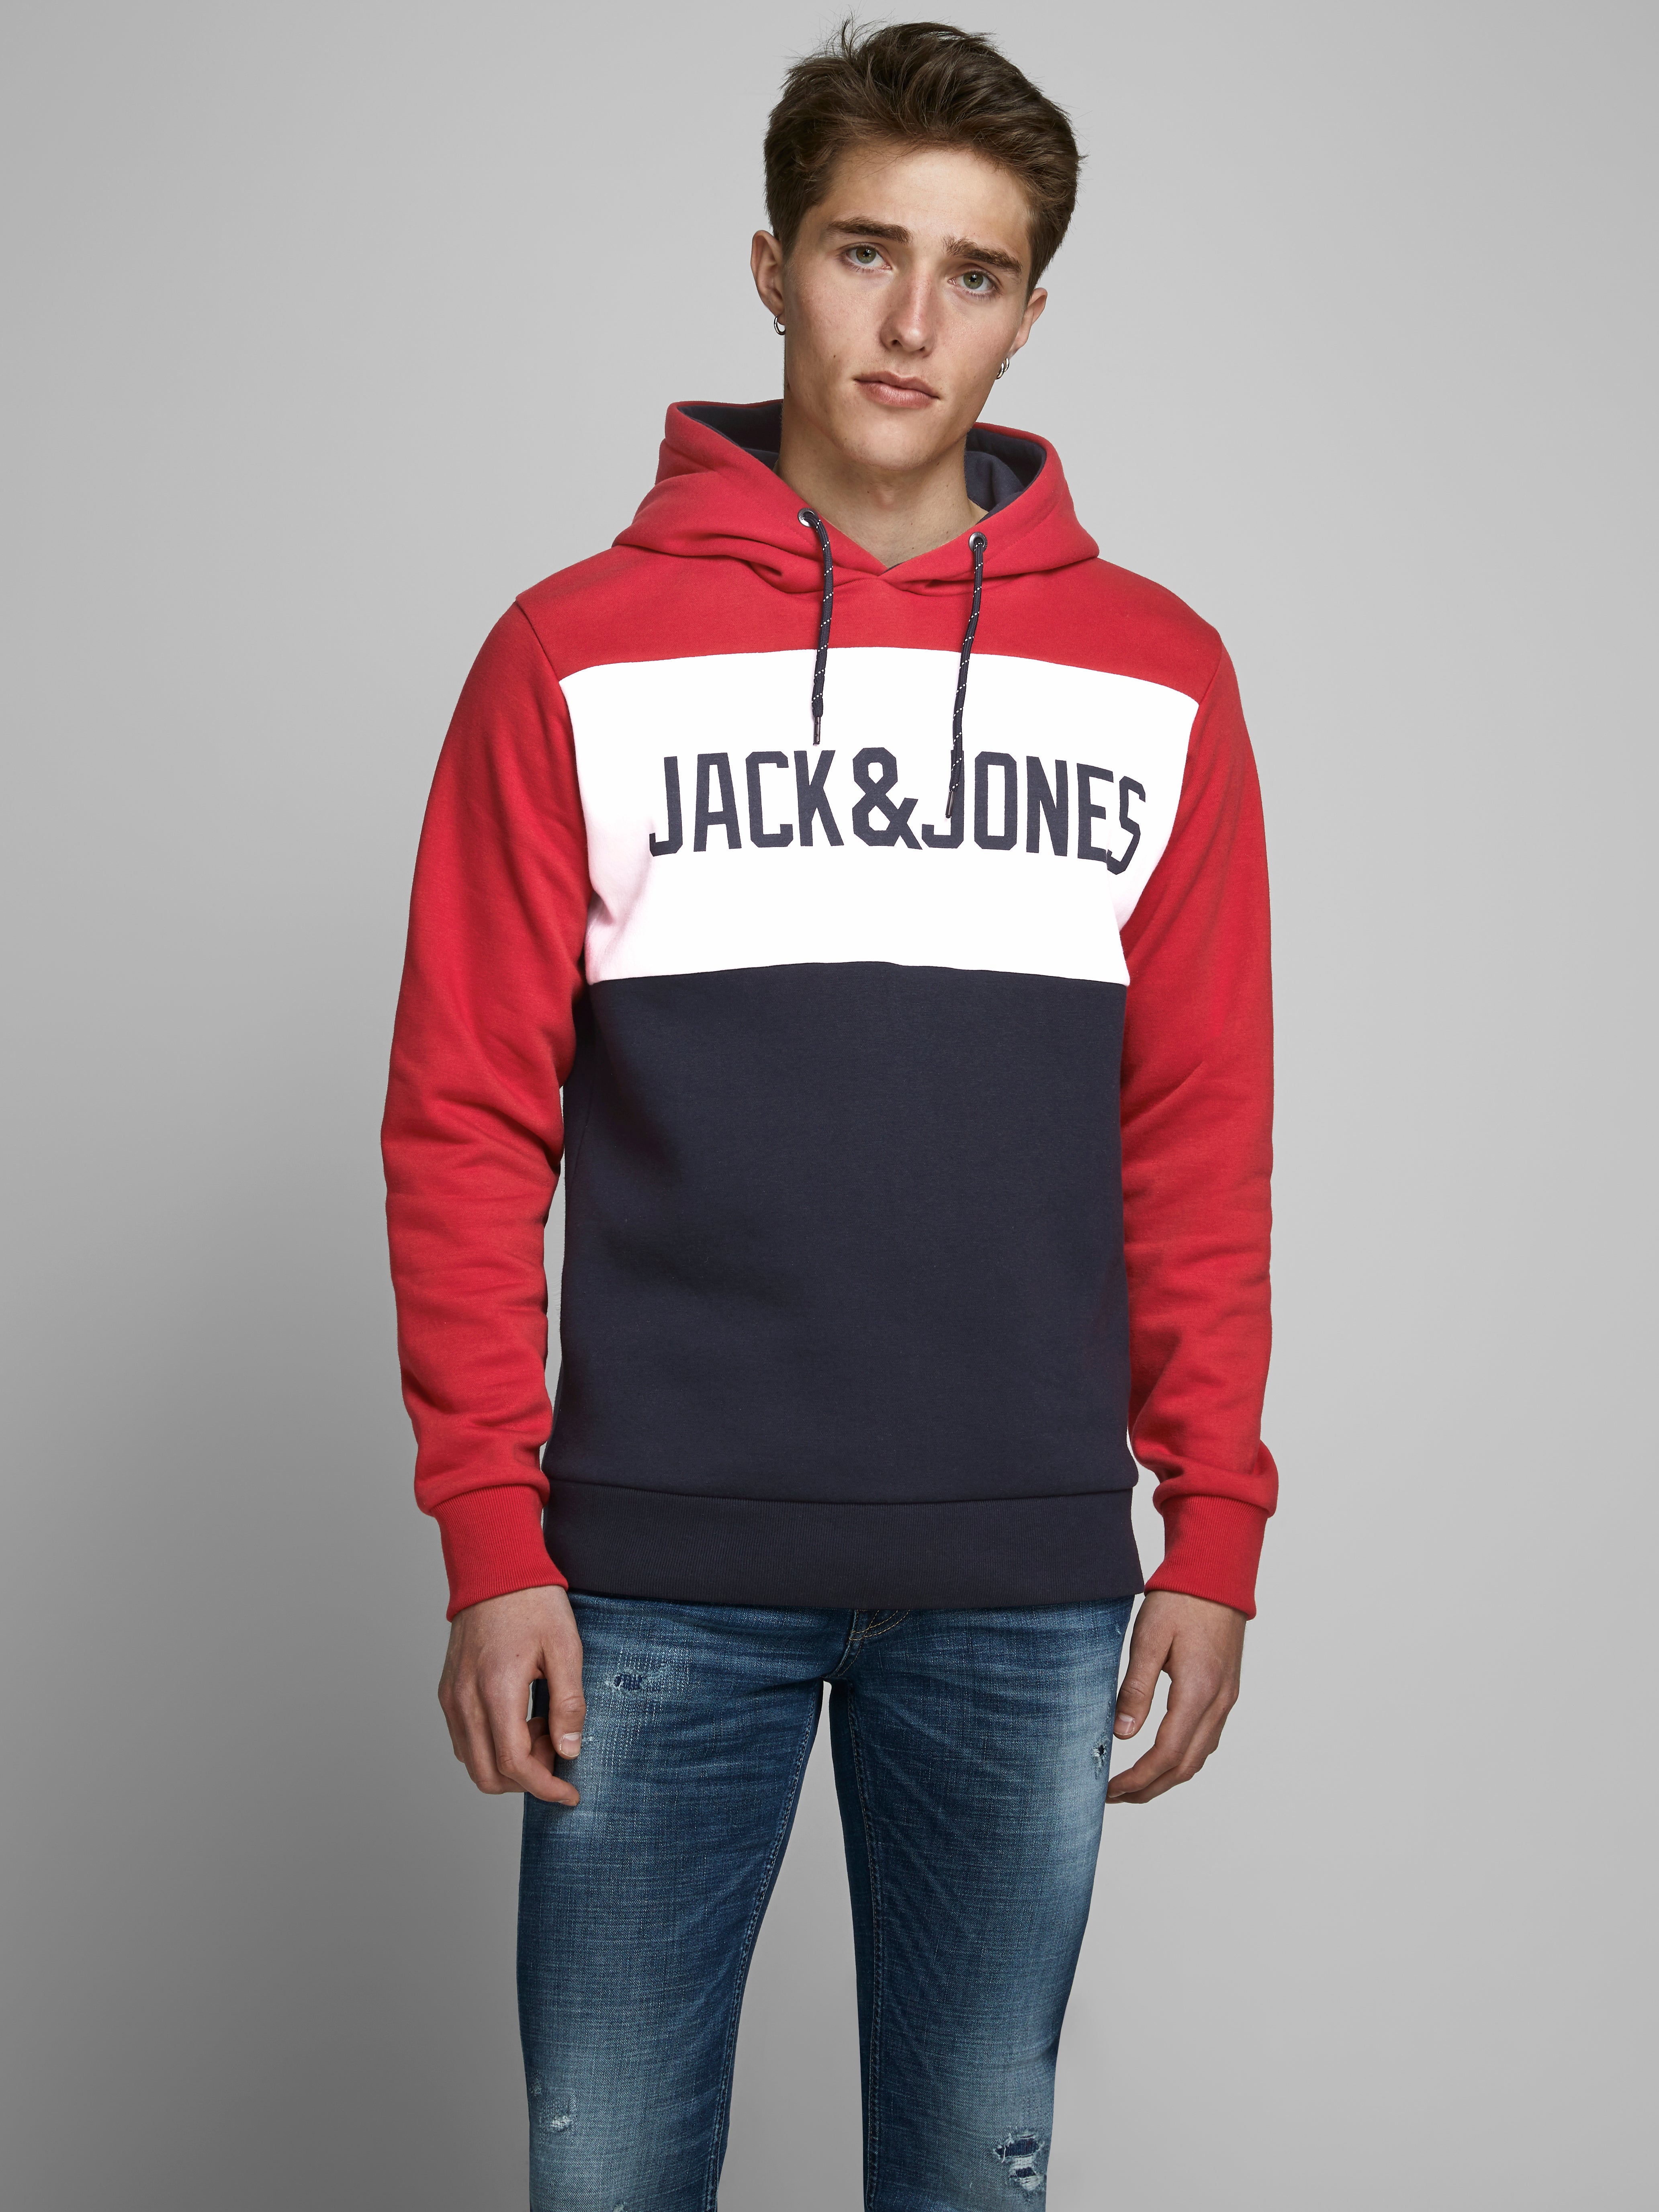 MEN FASHION Jumpers & Sweatshirts Hoodless discount 57% Jack & Jones sweatshirt Red L 